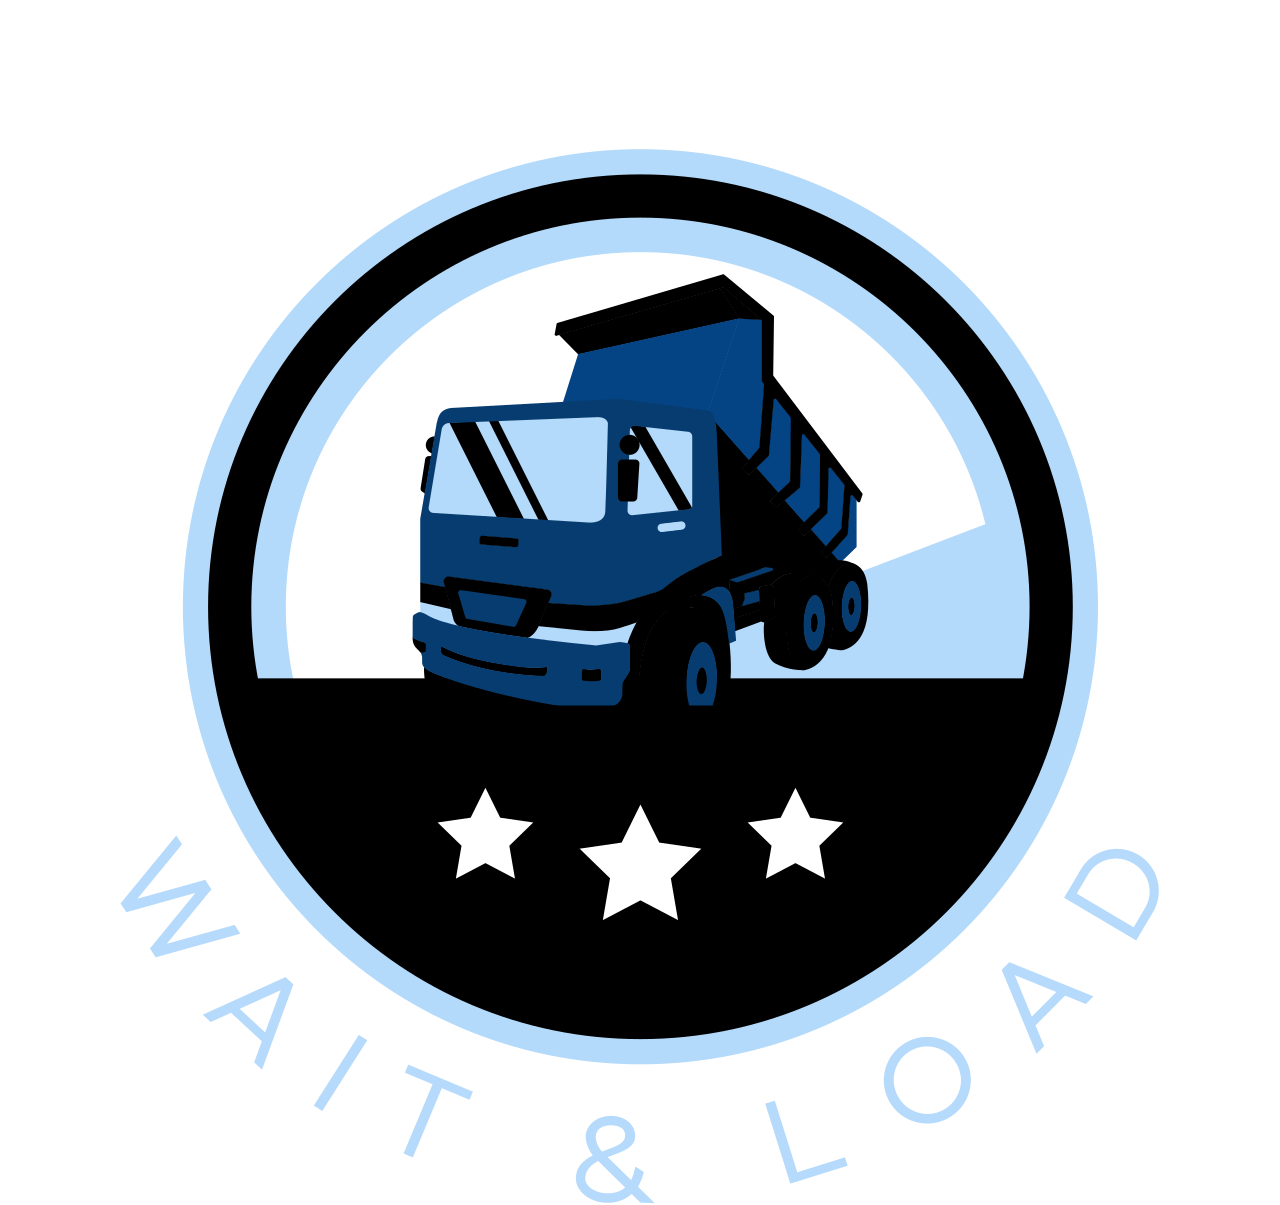 CJ WASTE LONDON's logo